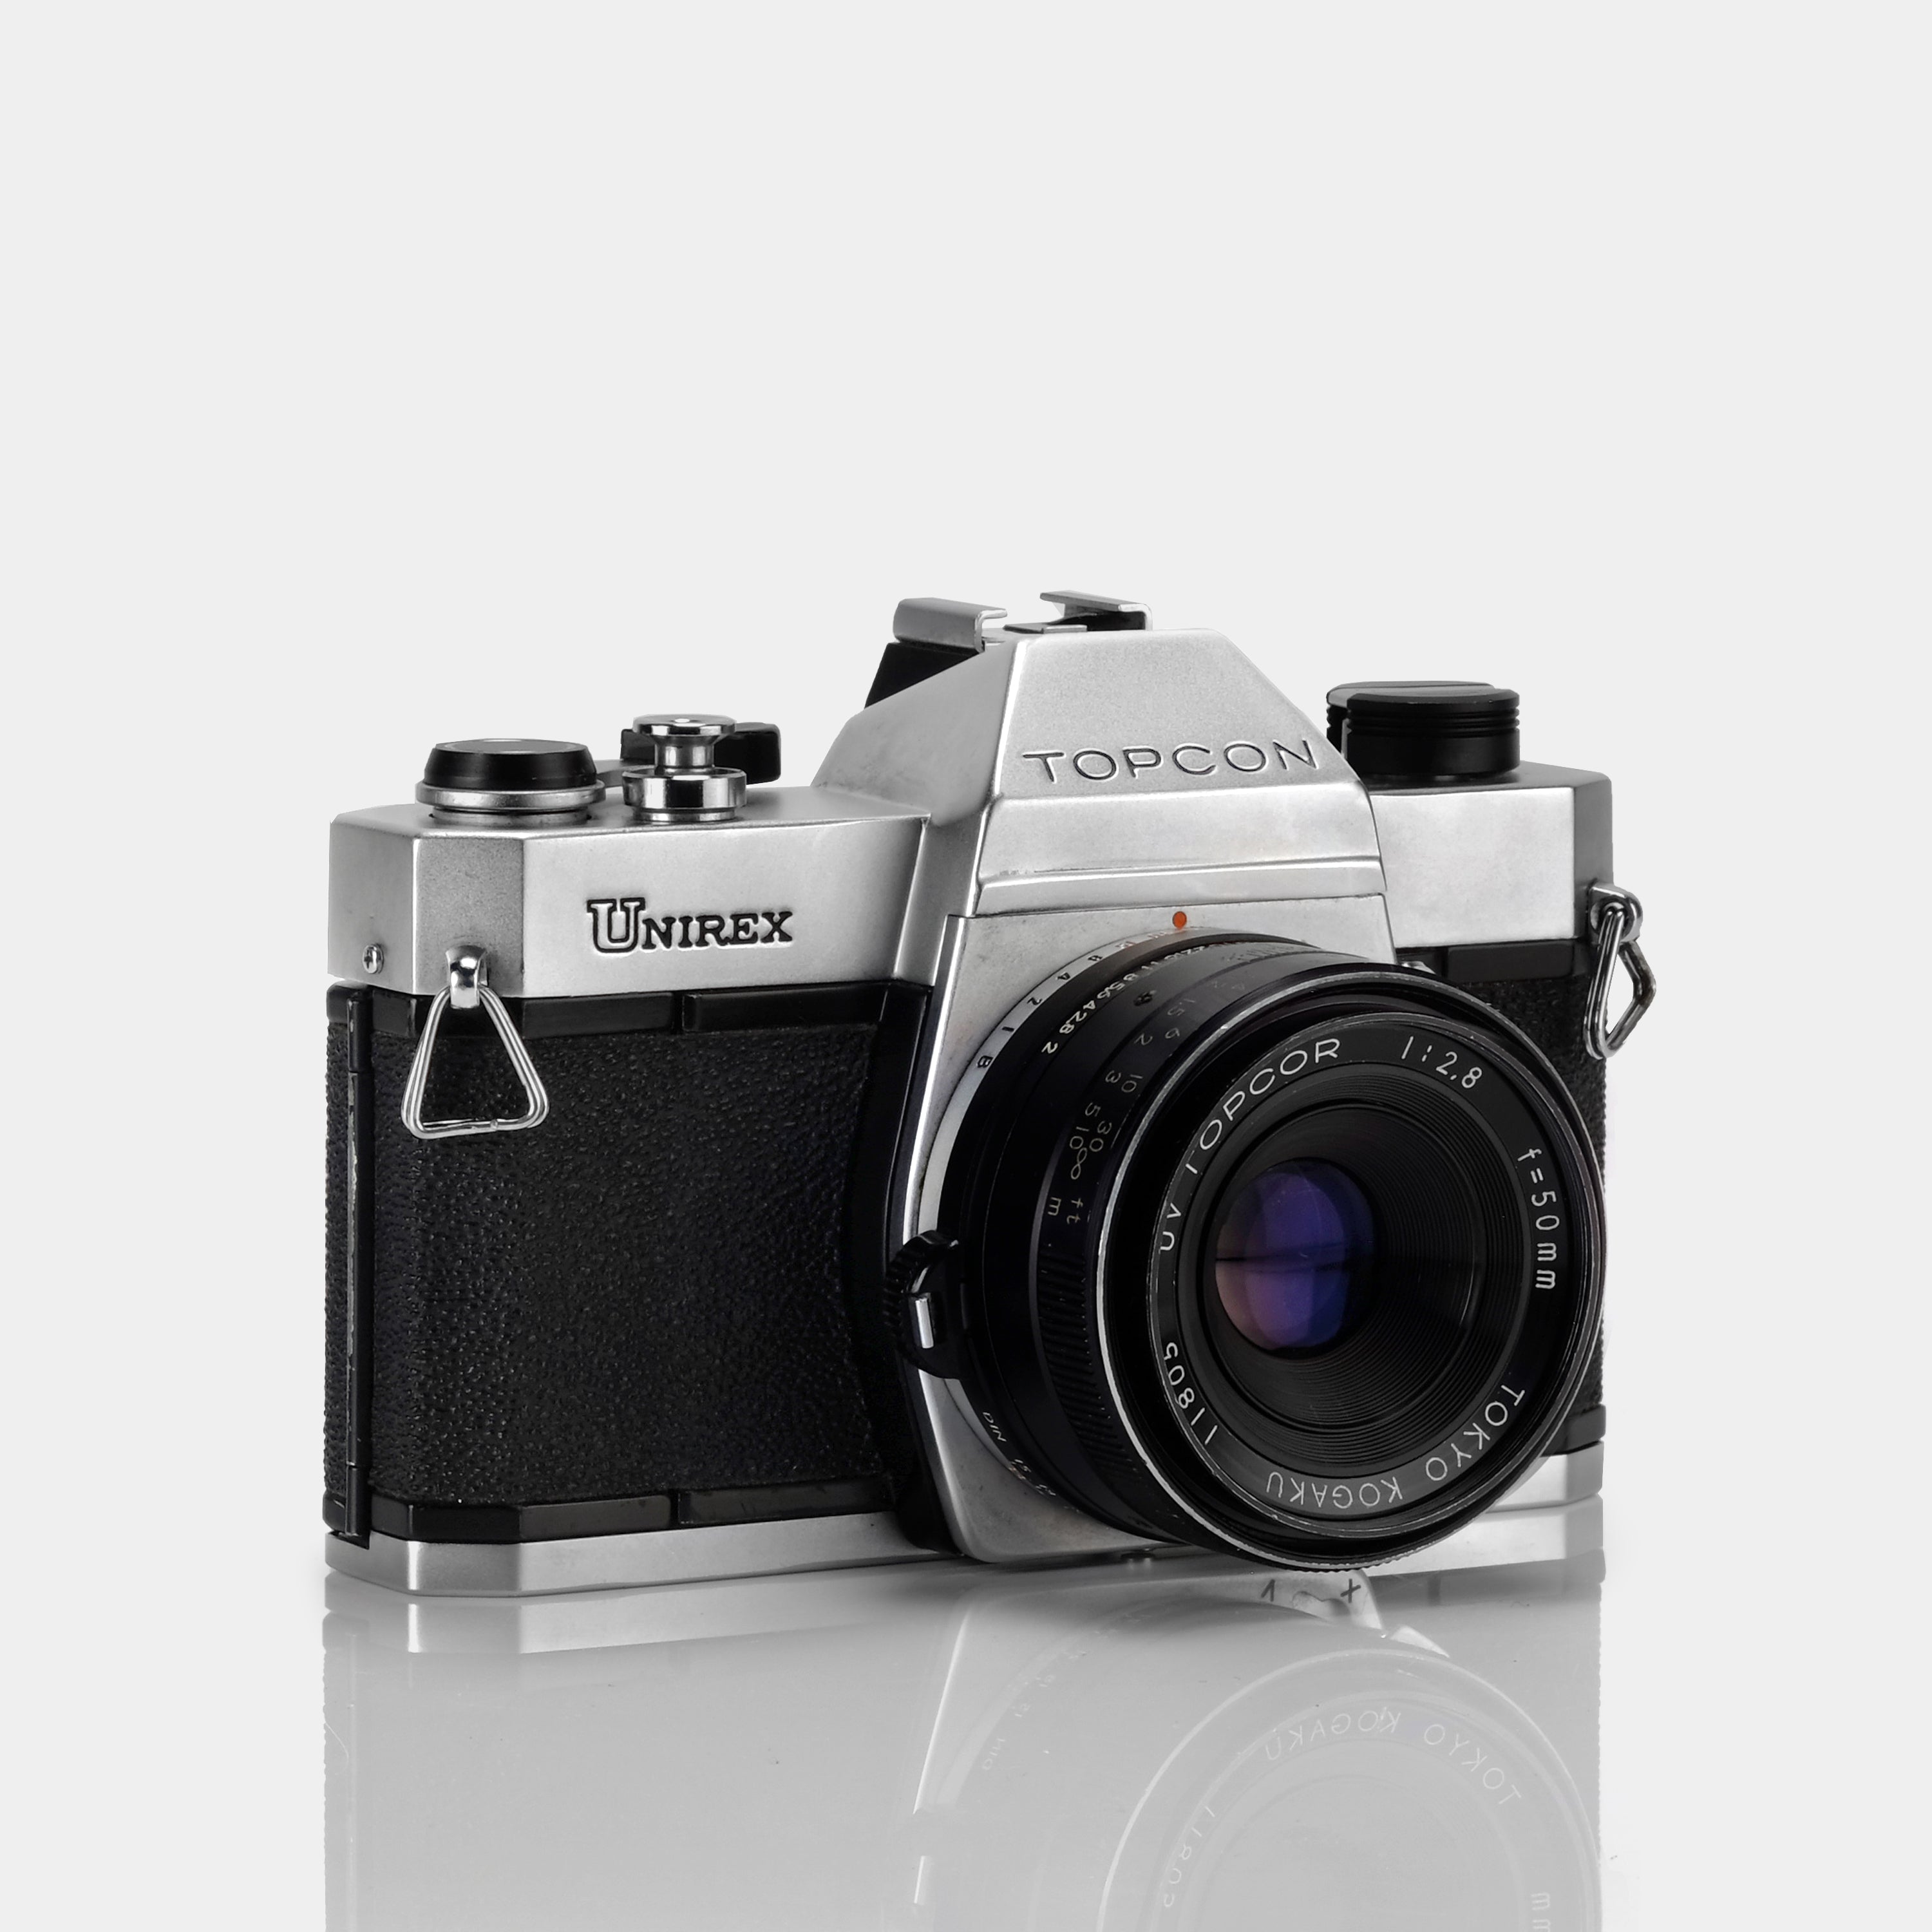 Topcon Unirex 35mm SLR Film Camera